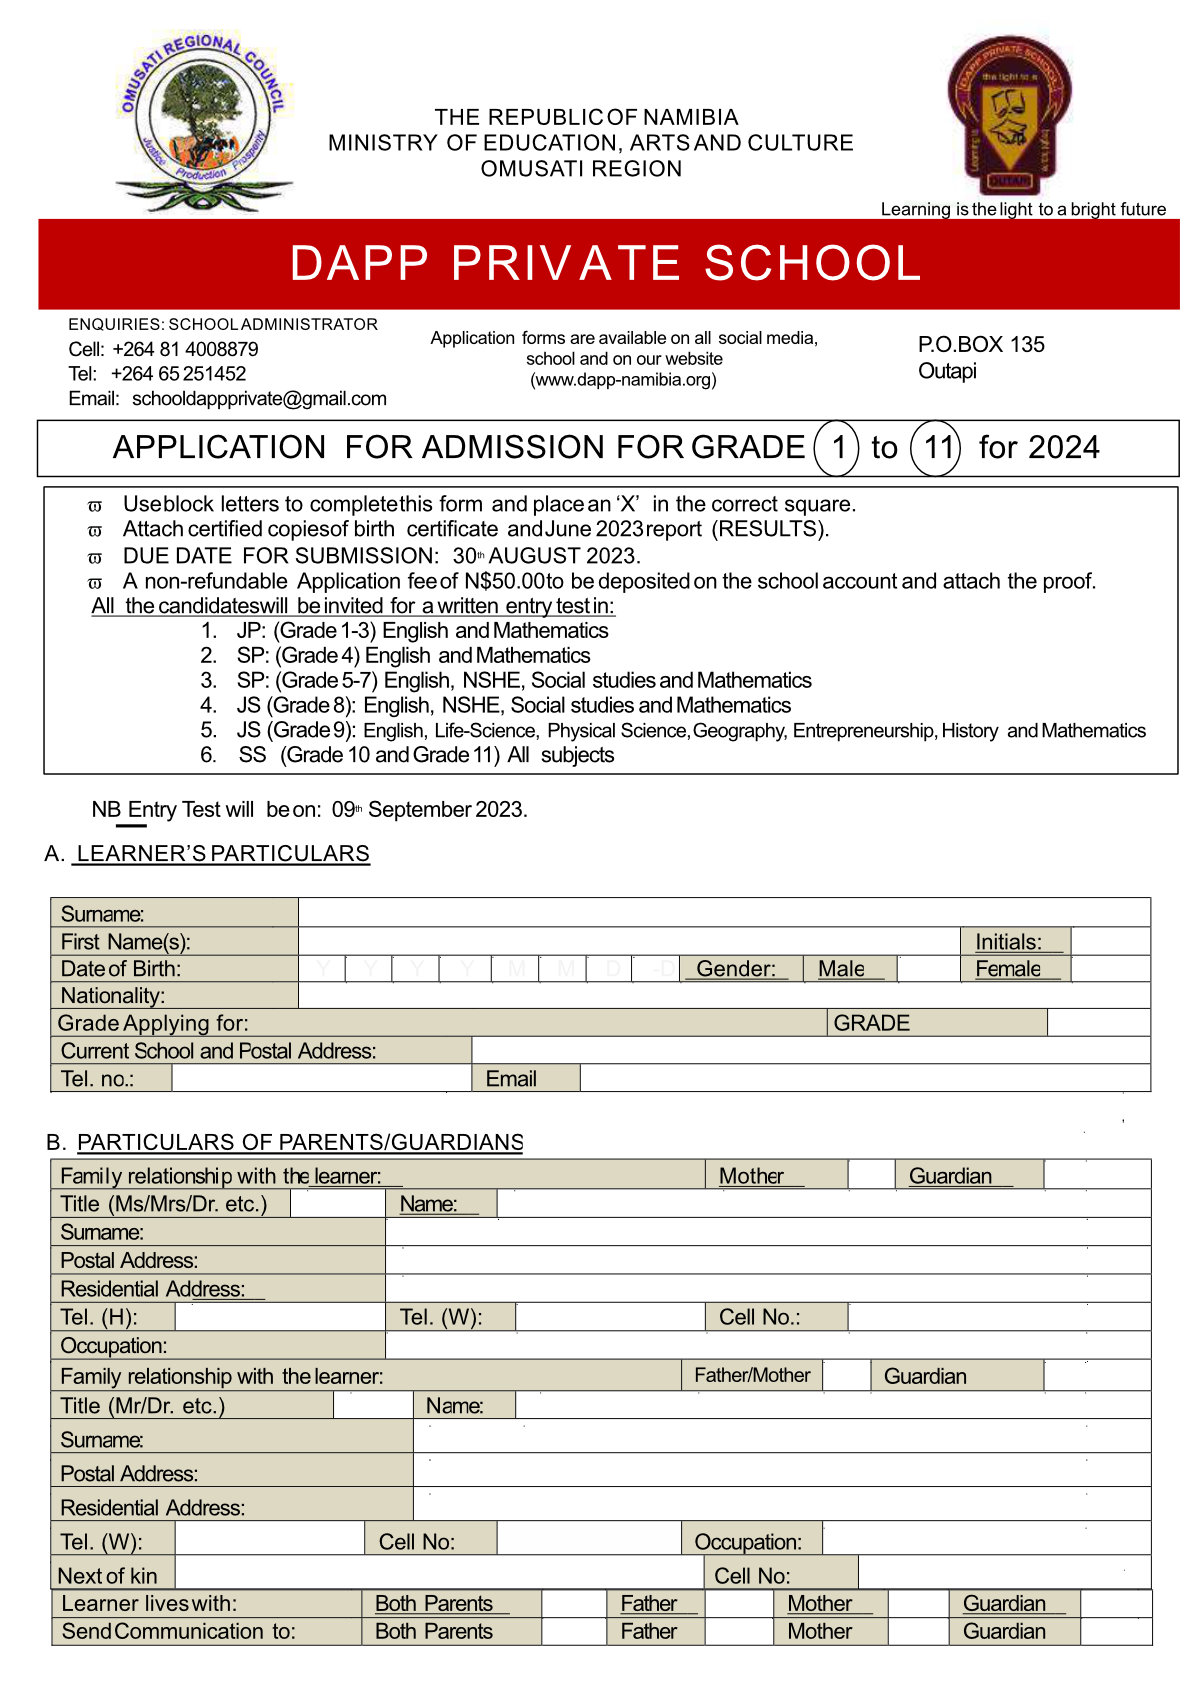 DAPP Private School Application Form 2024